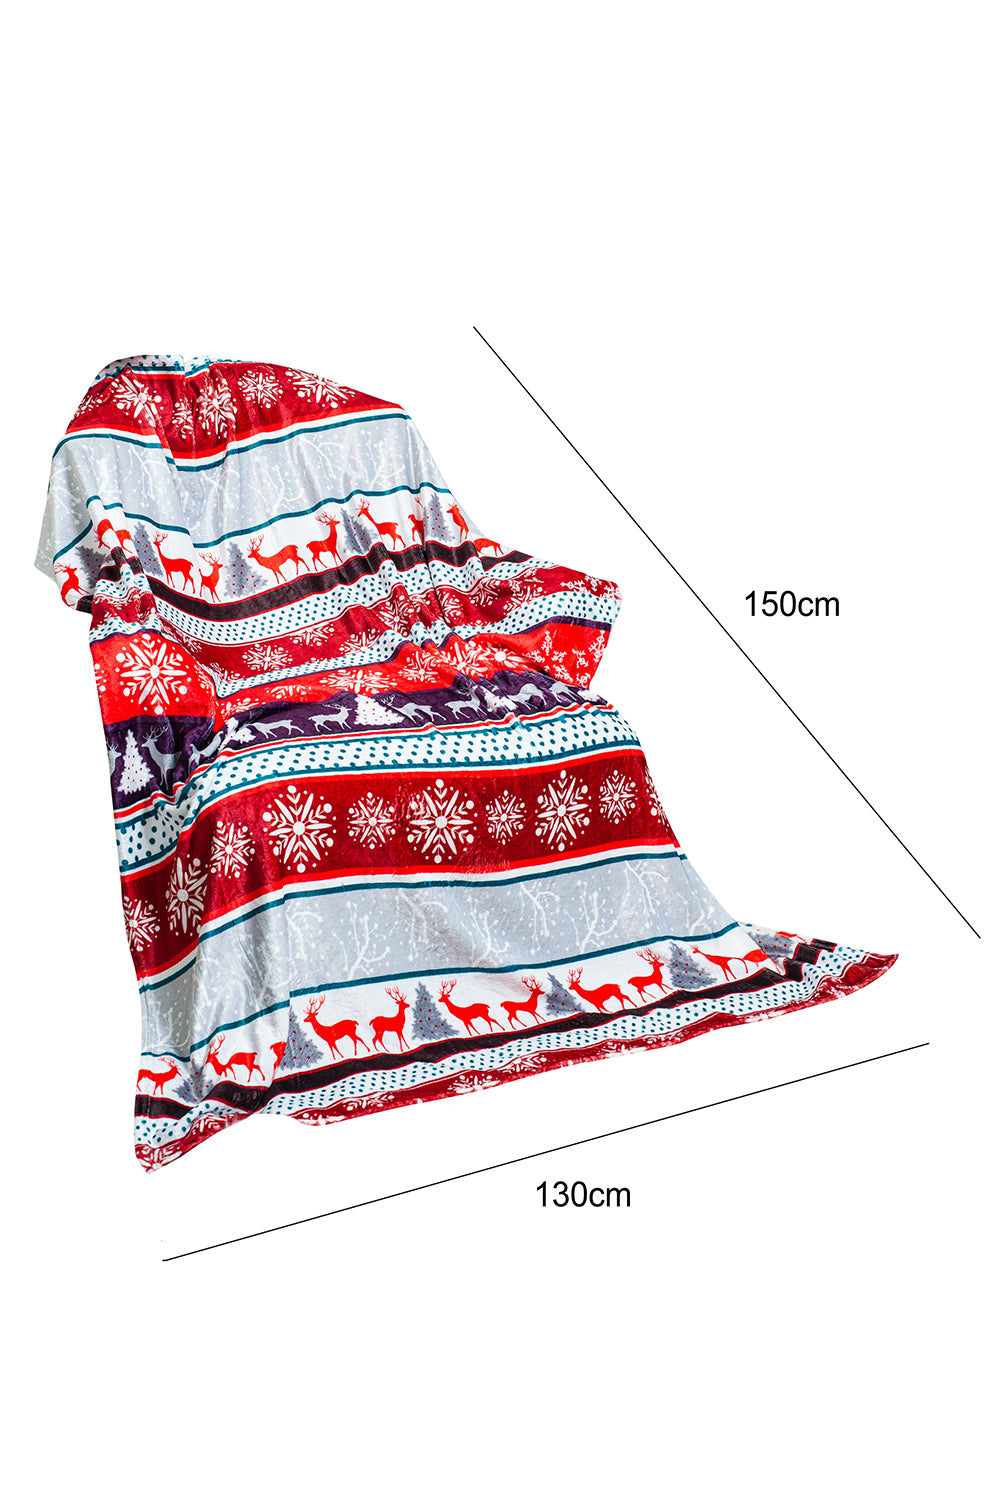 Fiery Red Christmas Elk Print Reversible Sherpa Fleece Blanket 130*150cm